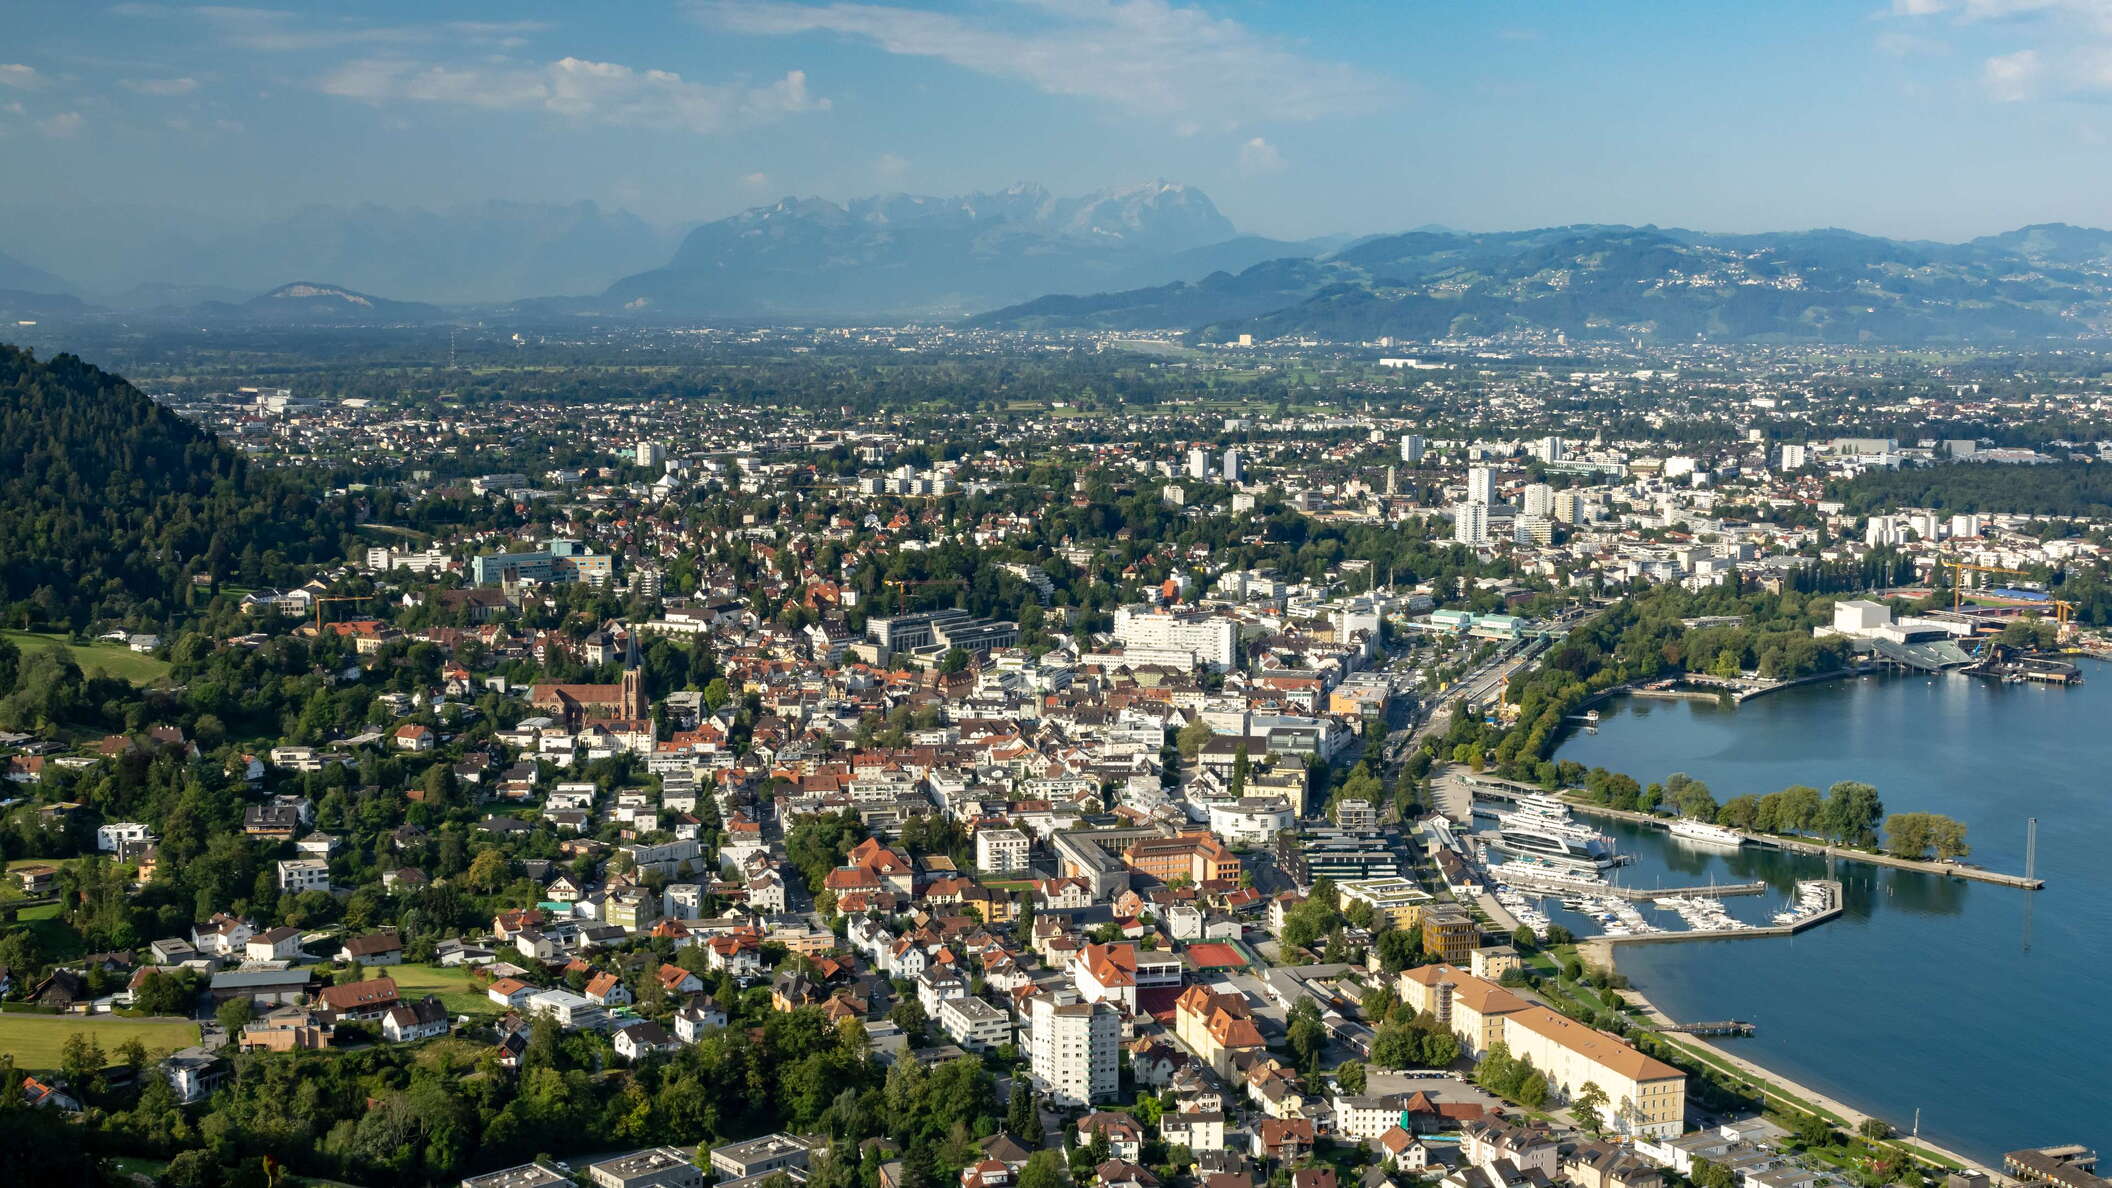 Bregenz with Bodensee